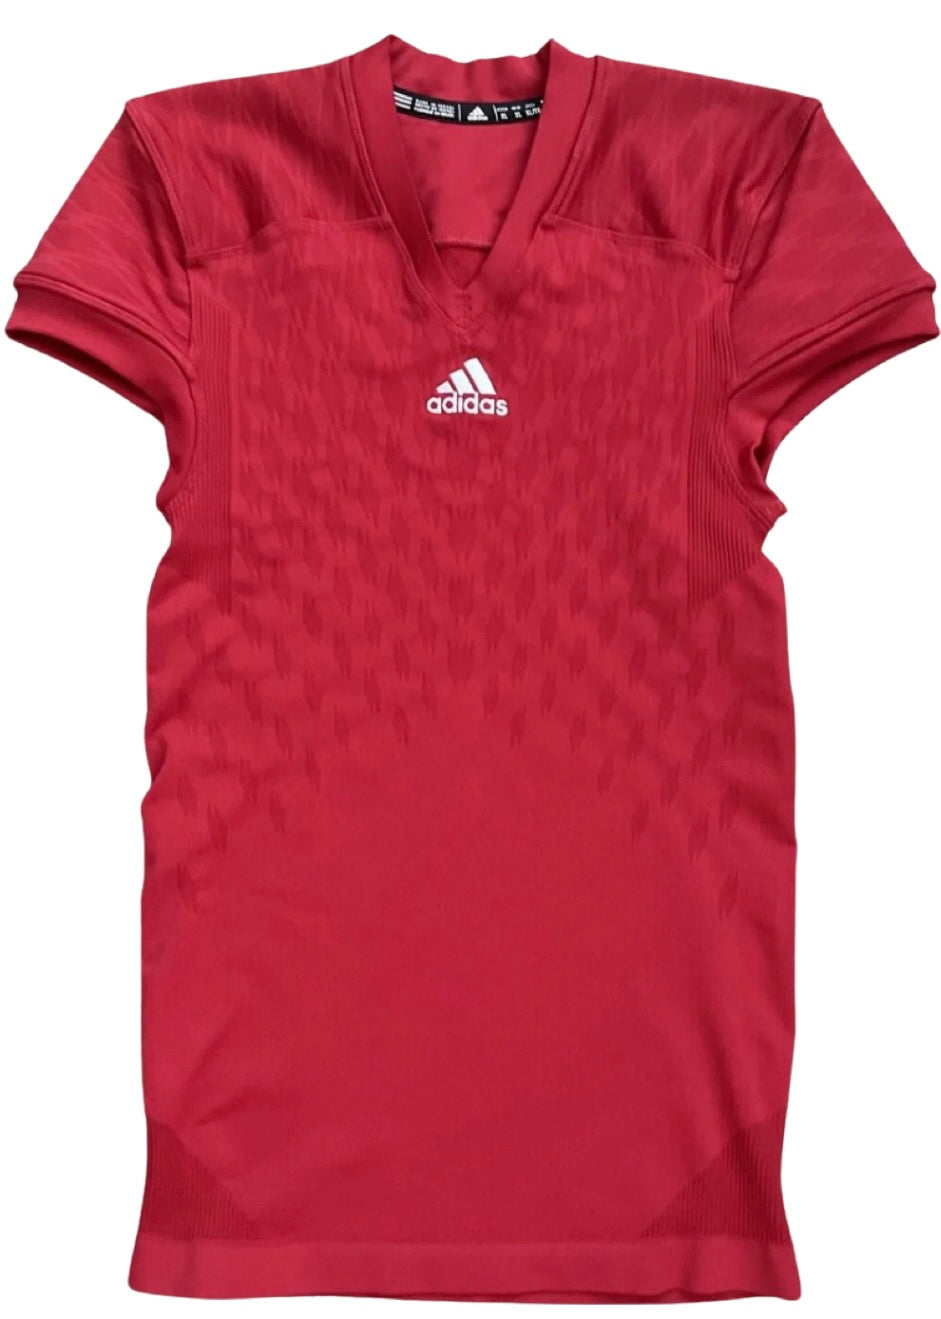 Adidas Techfit Primeknit Football Jersey - (10 Available)